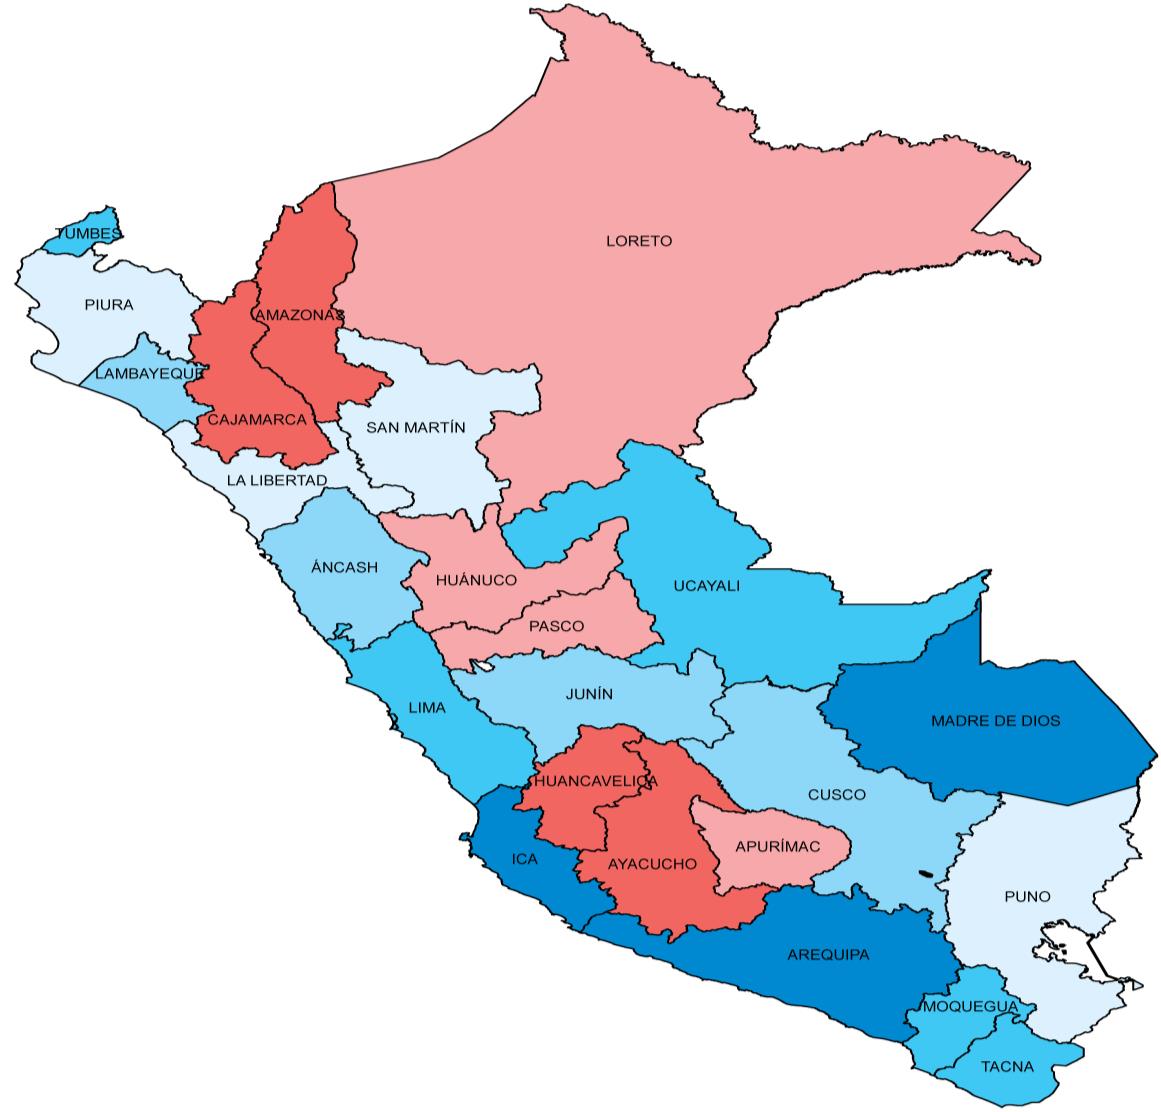 Grupos de Departamentos con Niveles de Pobreza Monetaria Semejantes Estadísticamente, 2014